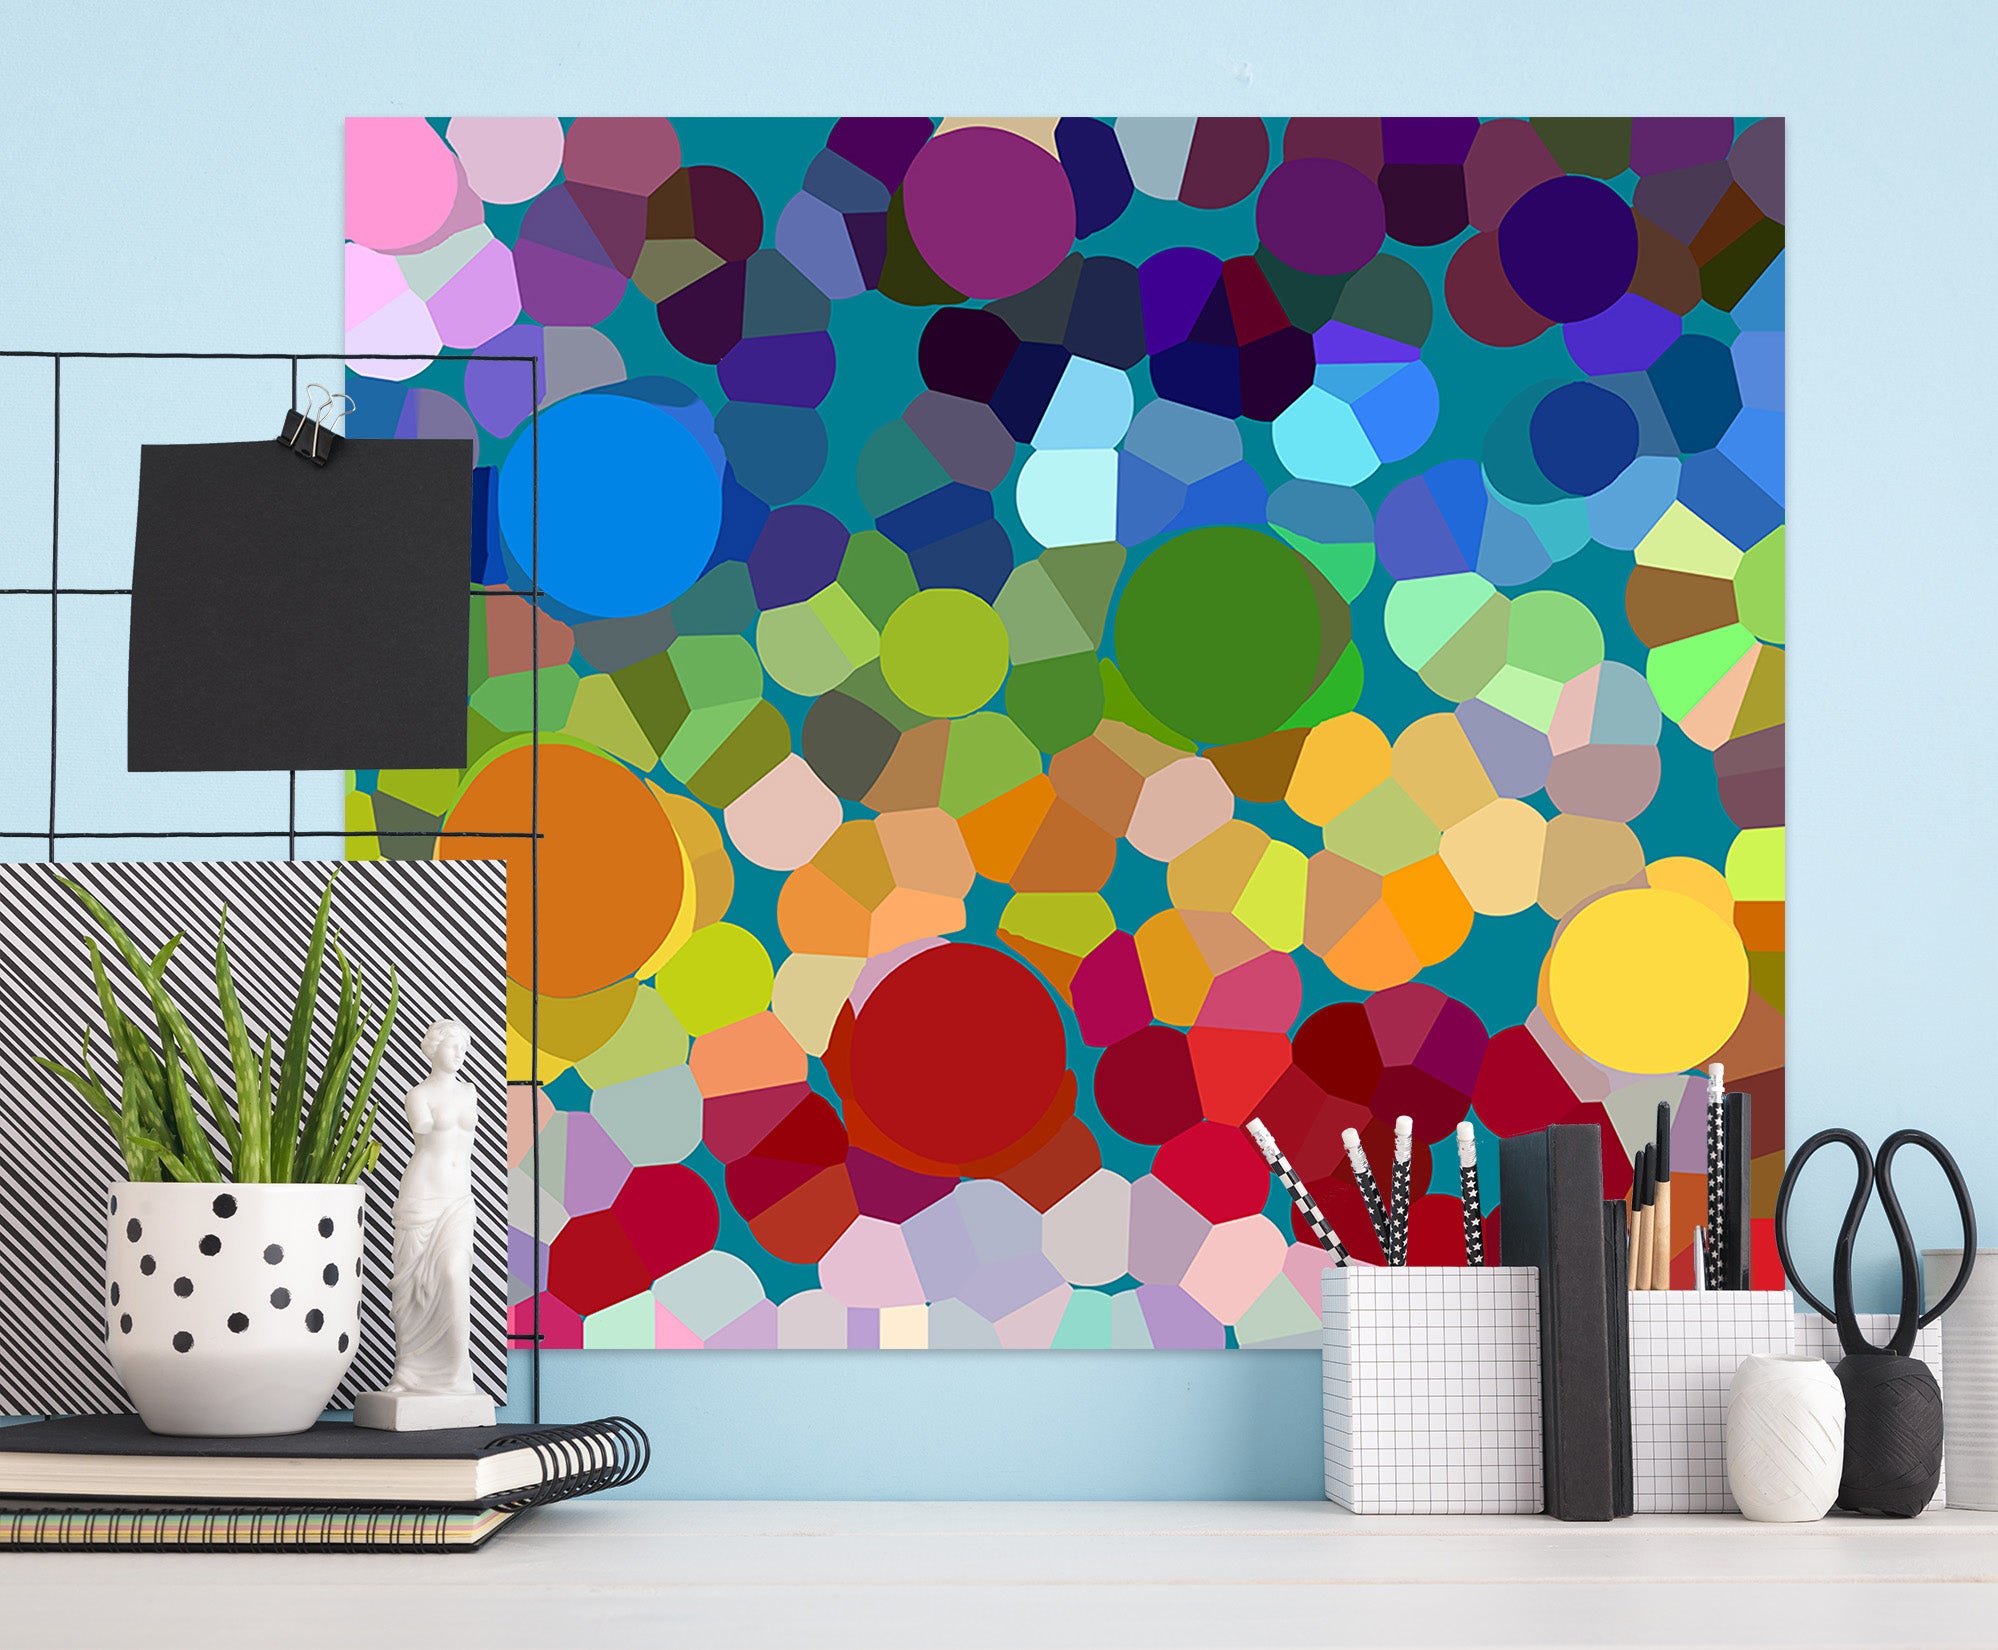 3D Colored Dreamland 71100 Shandra Smith Wall Sticker